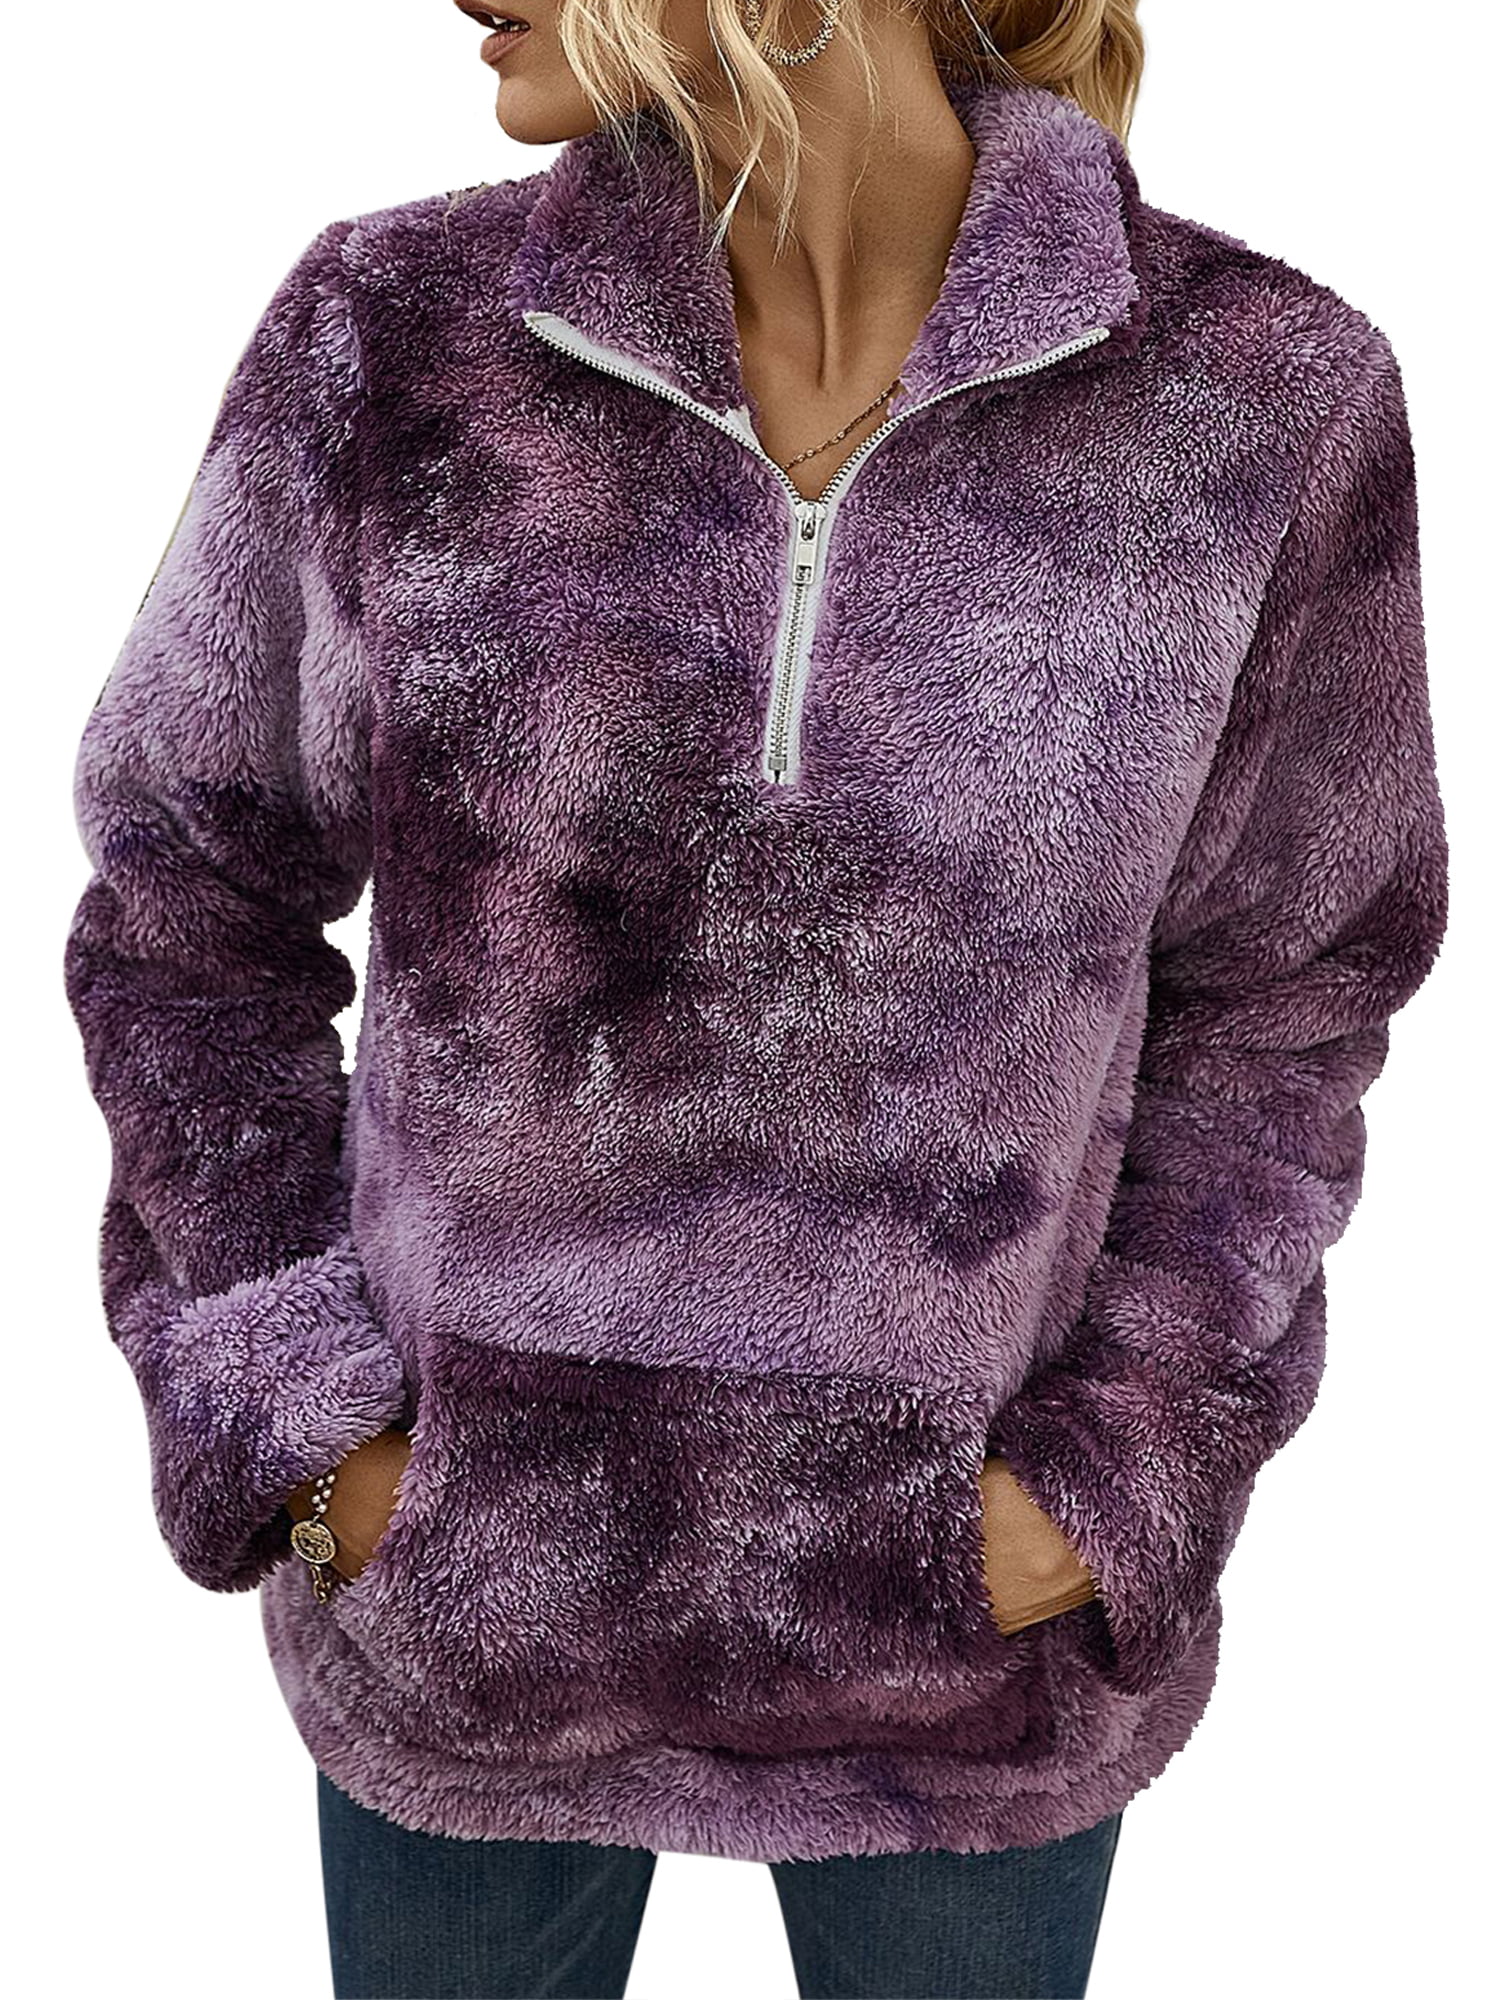 FUNEY Womens Casual Plush Sherpa Fleece Pullover Sweatshirts Long Sleeve 1/4 Zipper Collar Jacket Coat Tops Blouse 